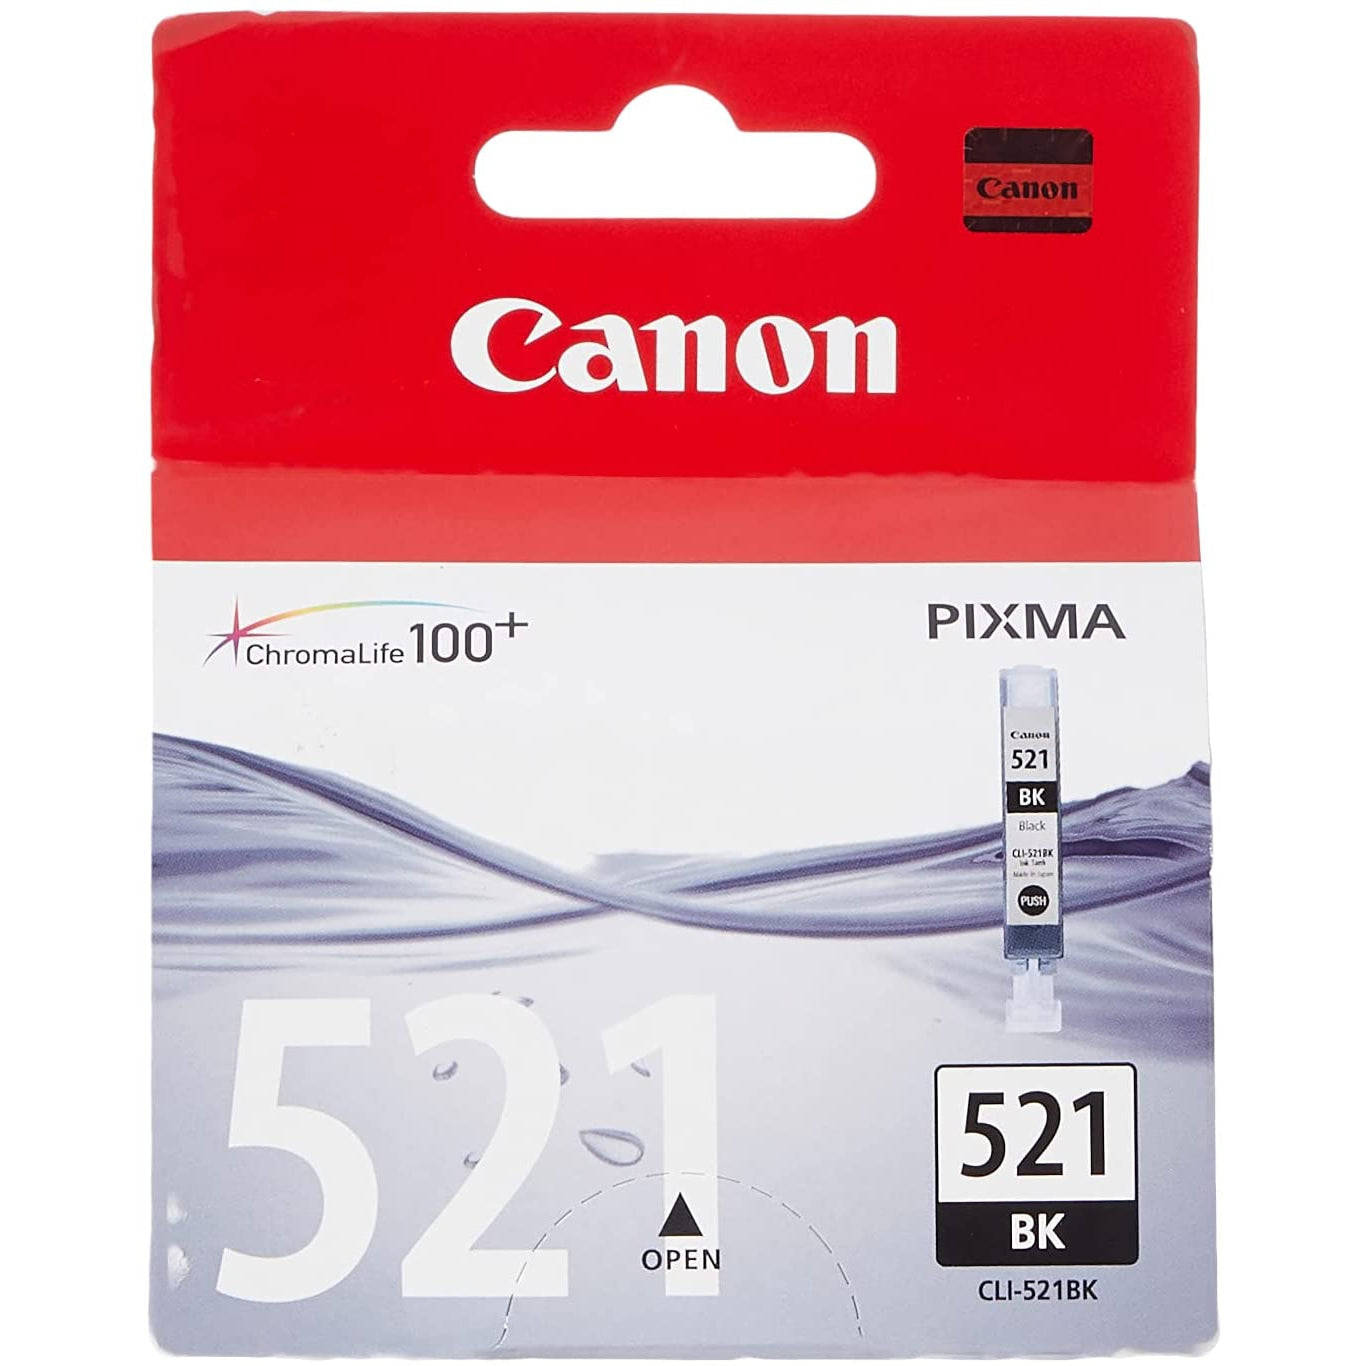 Canon Pixma CLI-521BK Ink Cartridge - Black